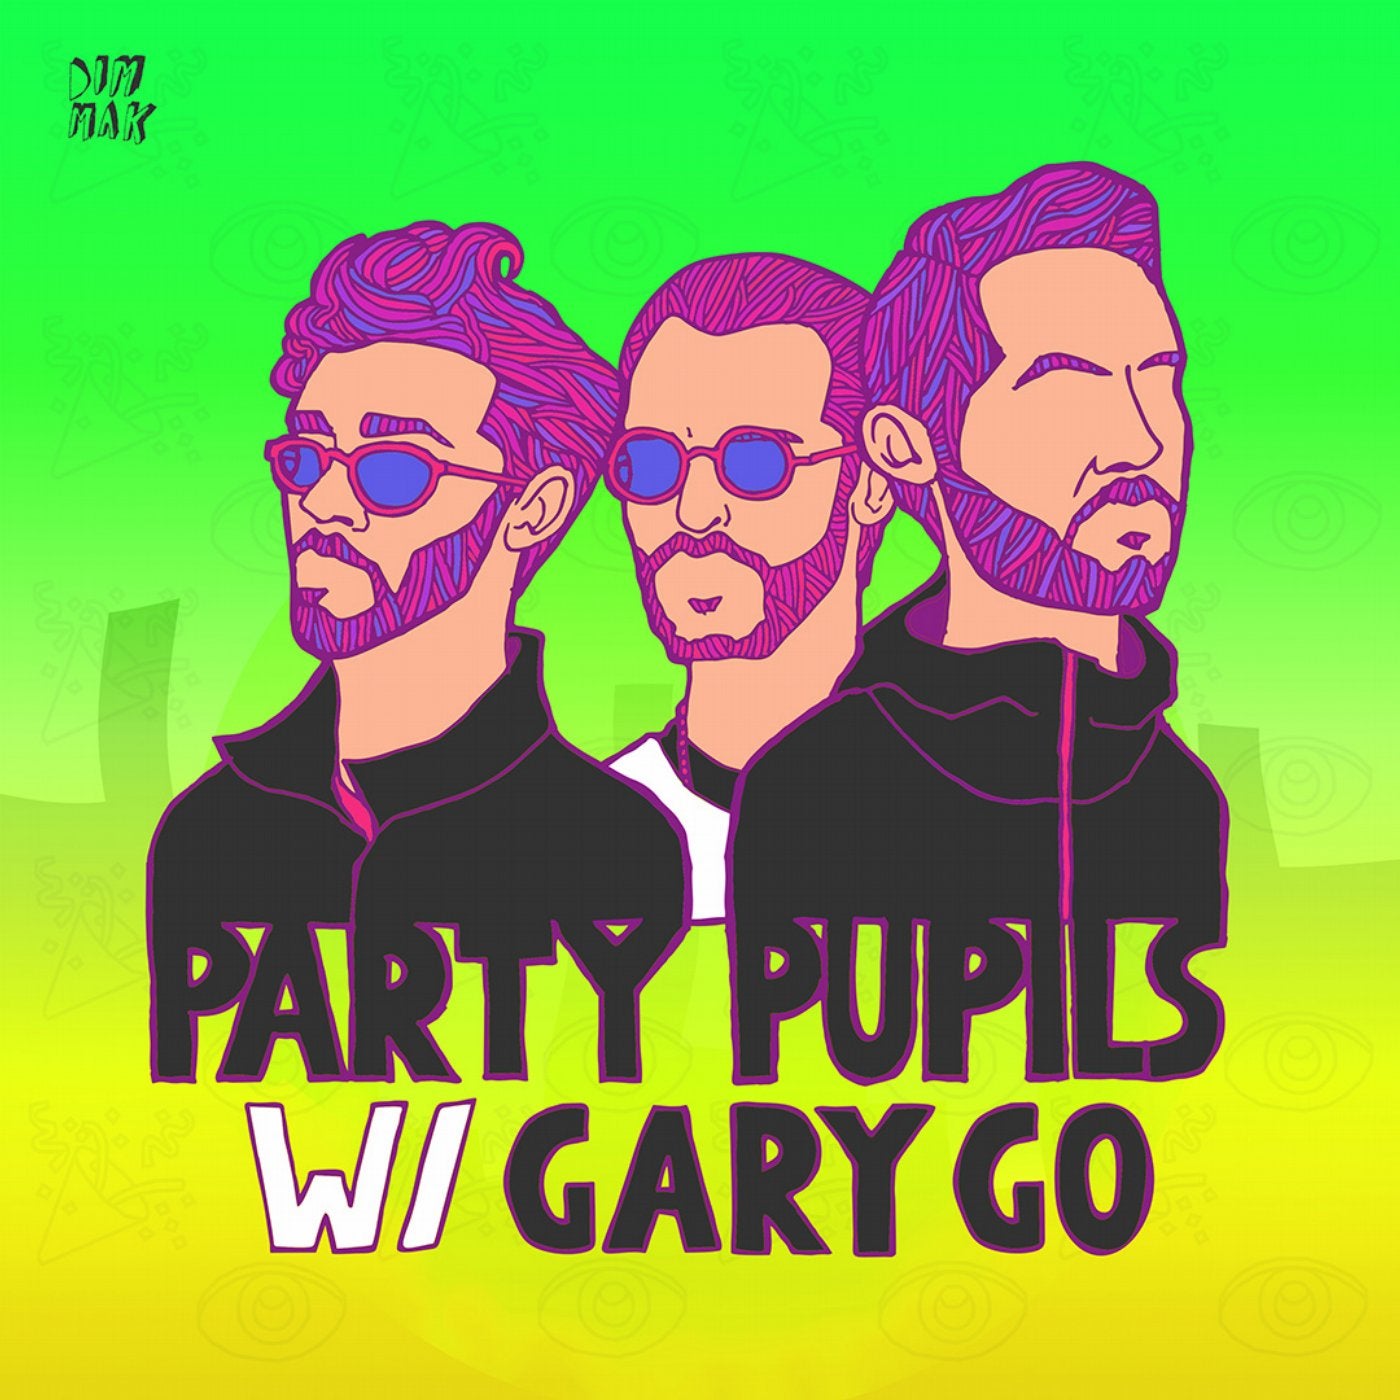 West Coast Tears (feat. Gary Go) [Remixes]